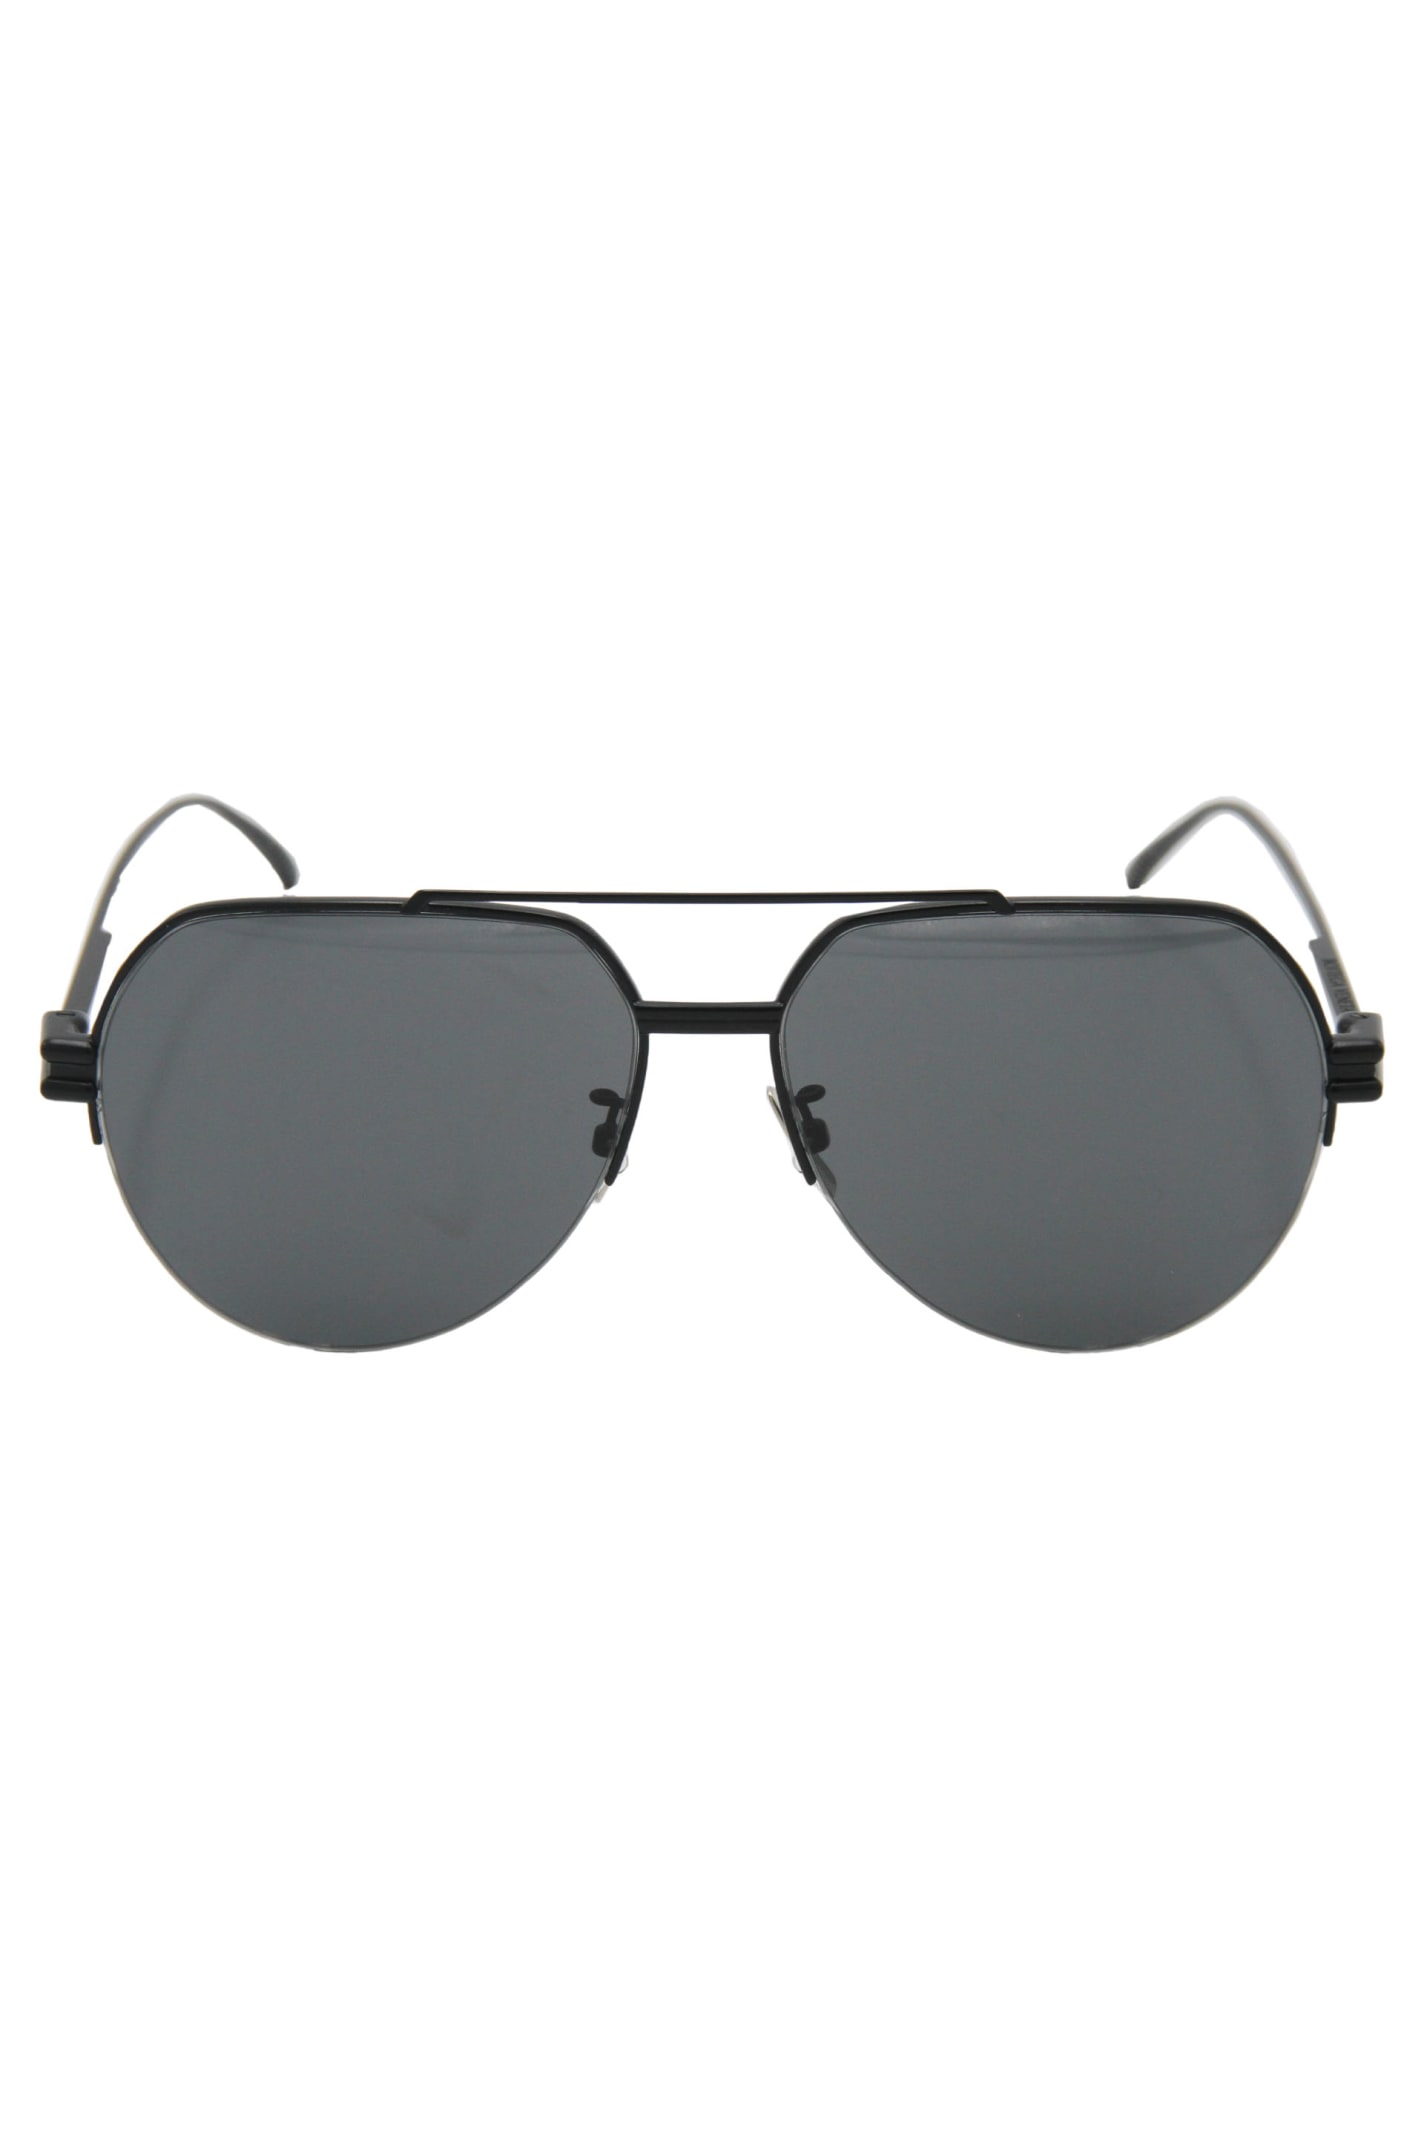 Bottega Veneta Pilot Sunglasses In Black